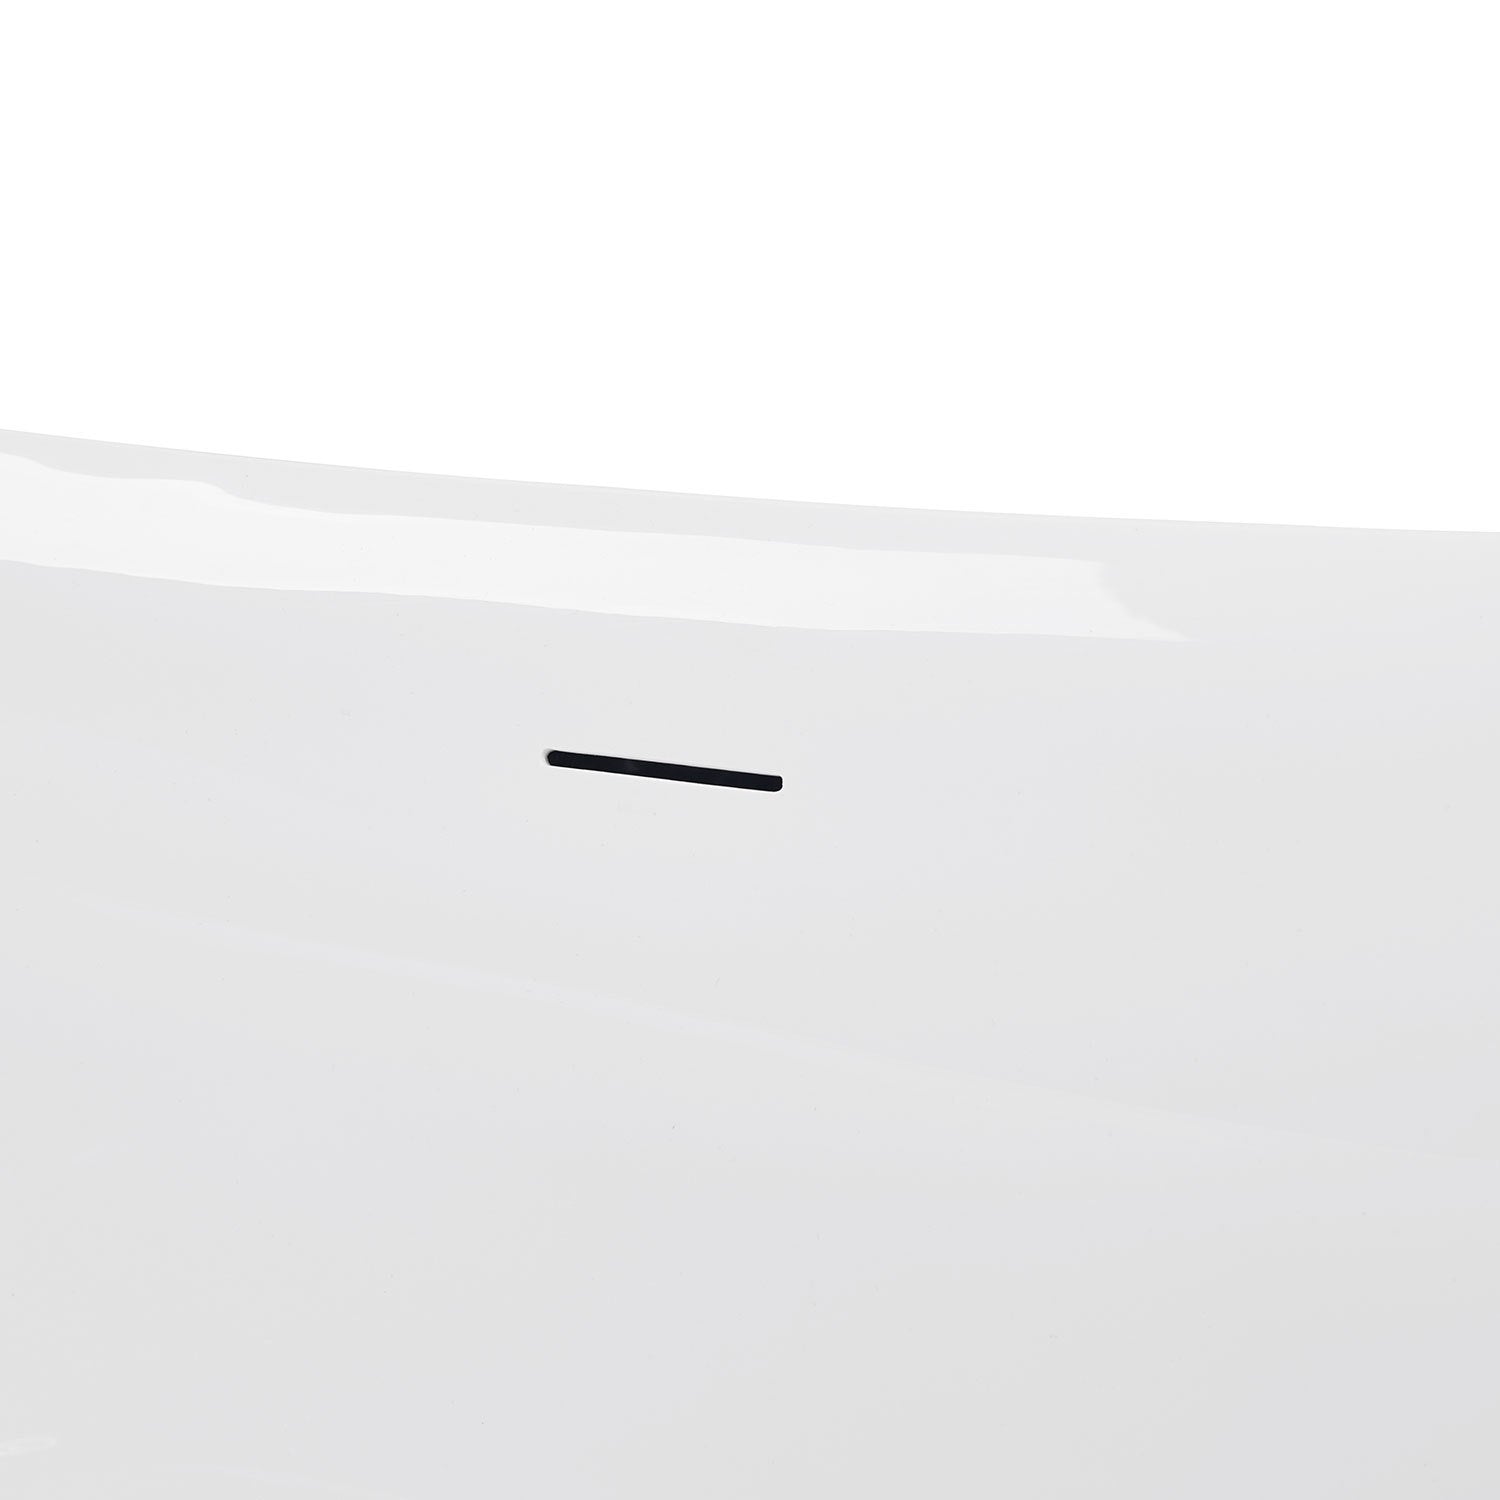 67" 100% Acrylic Freestanding Bathtub Contemporary white-acrylic